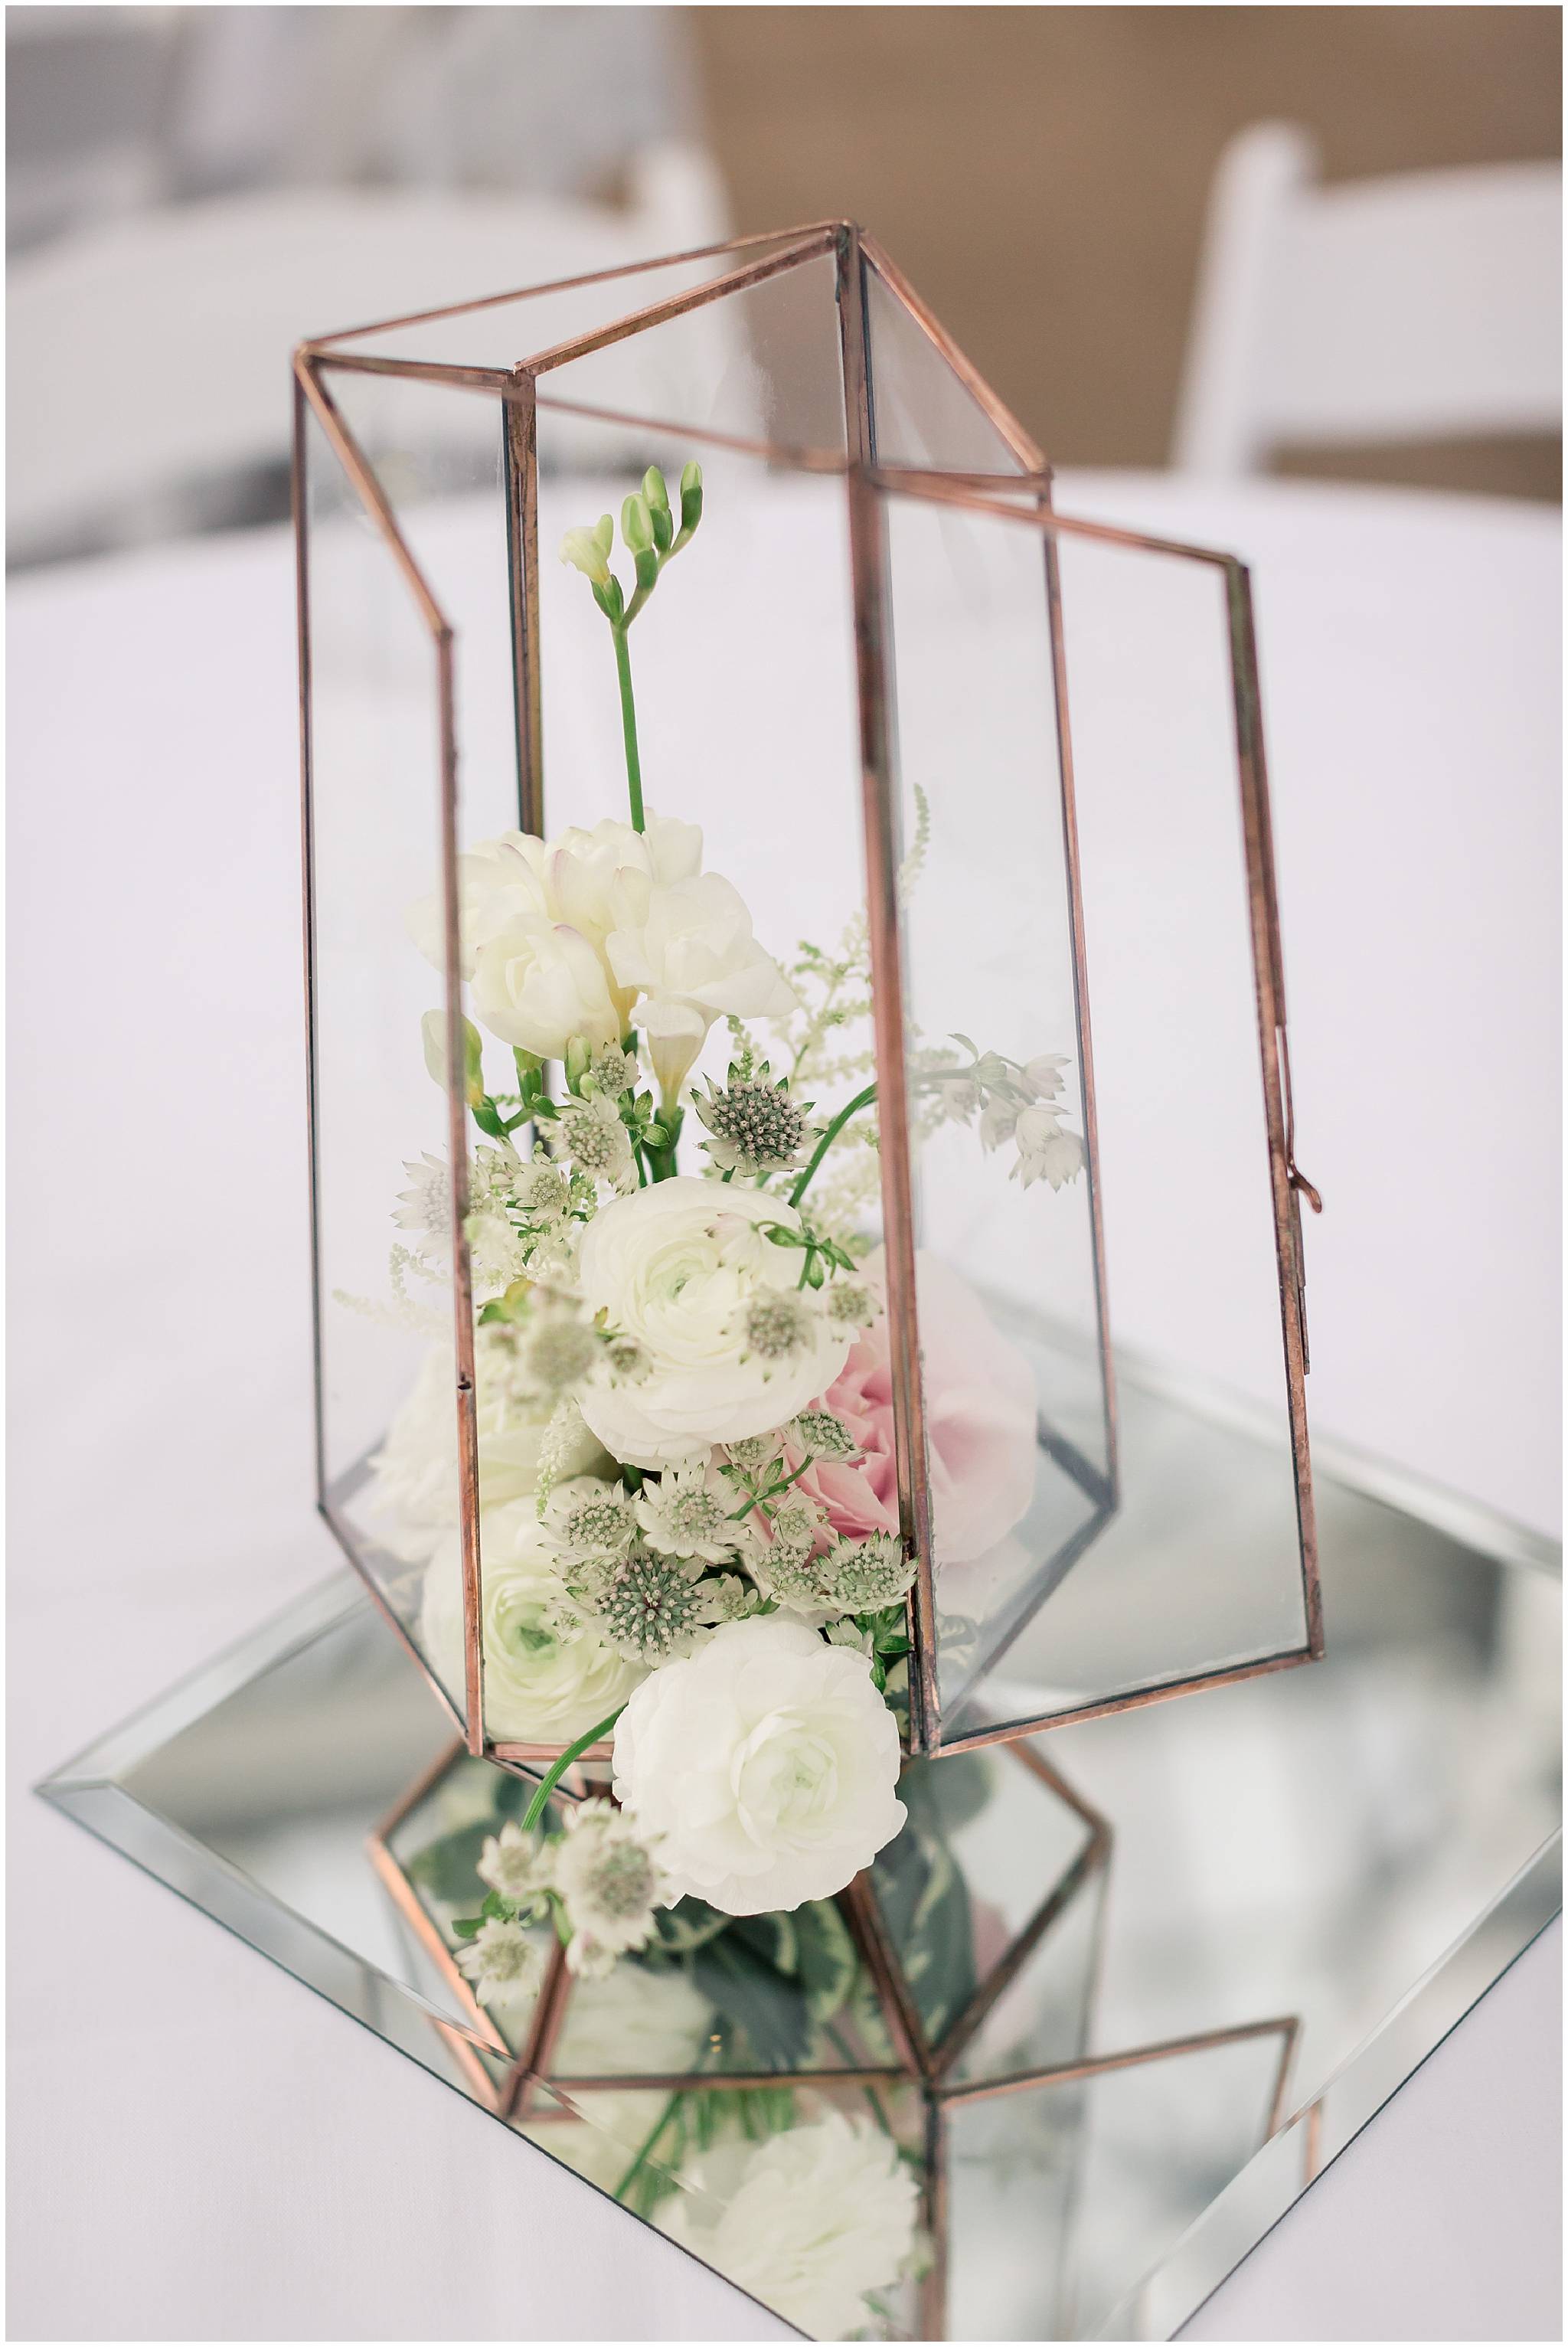 JL Designs Athens Monroe Wedding Flowers Pictures